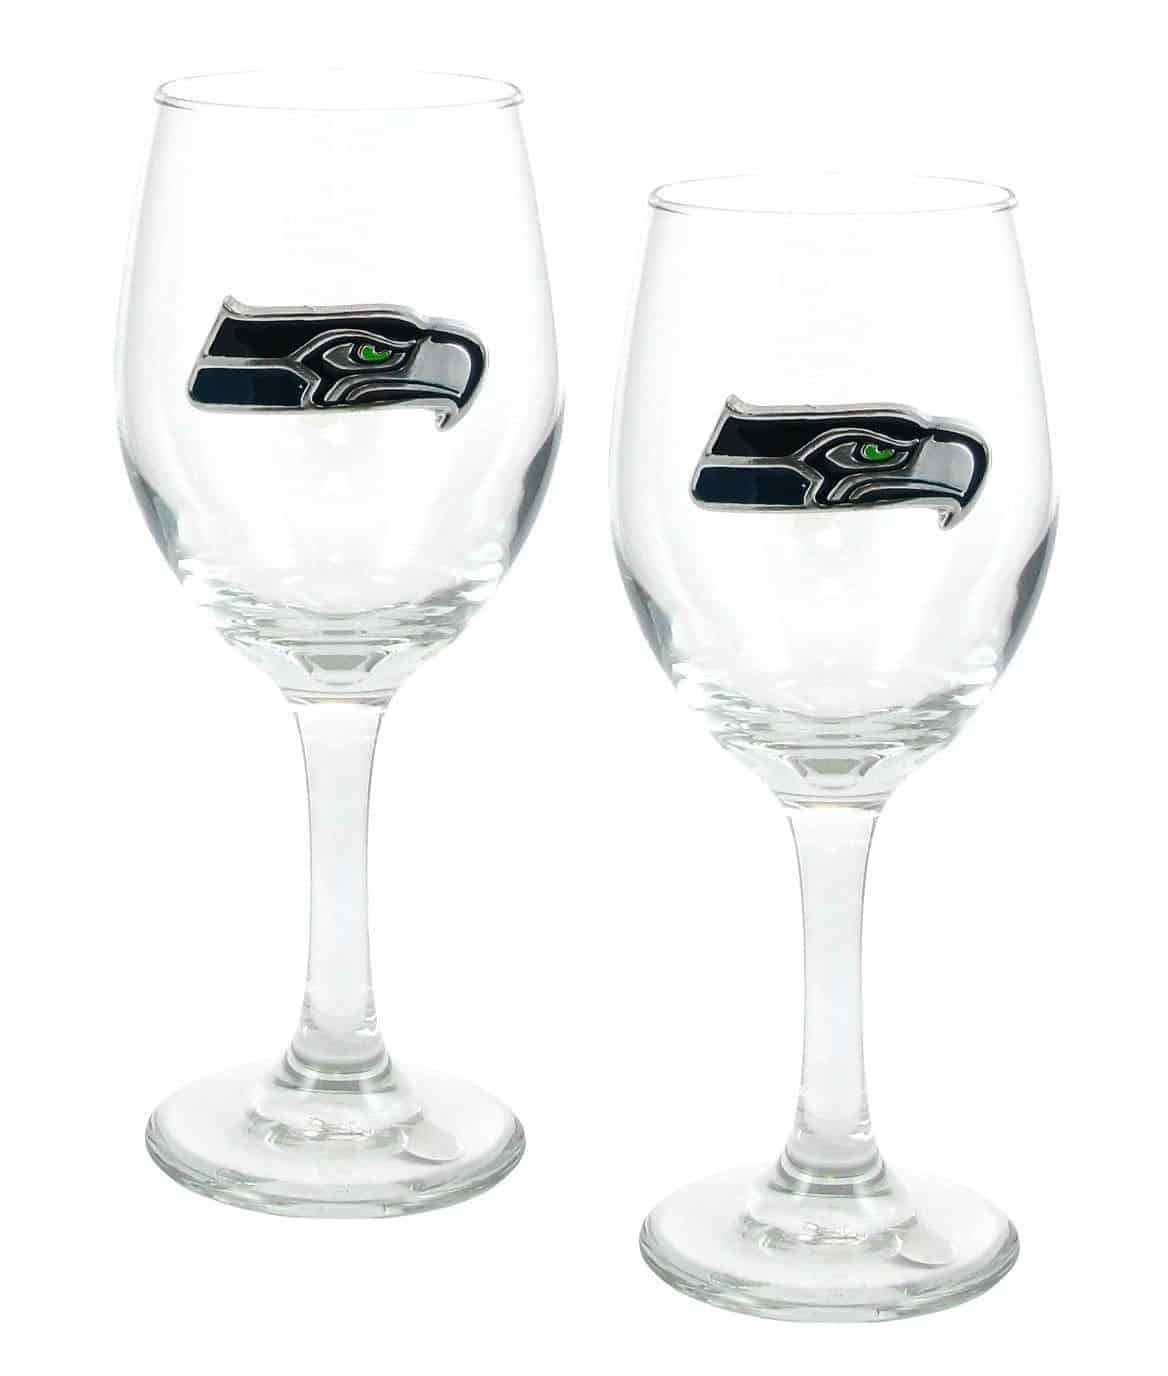 NFL wine glasses